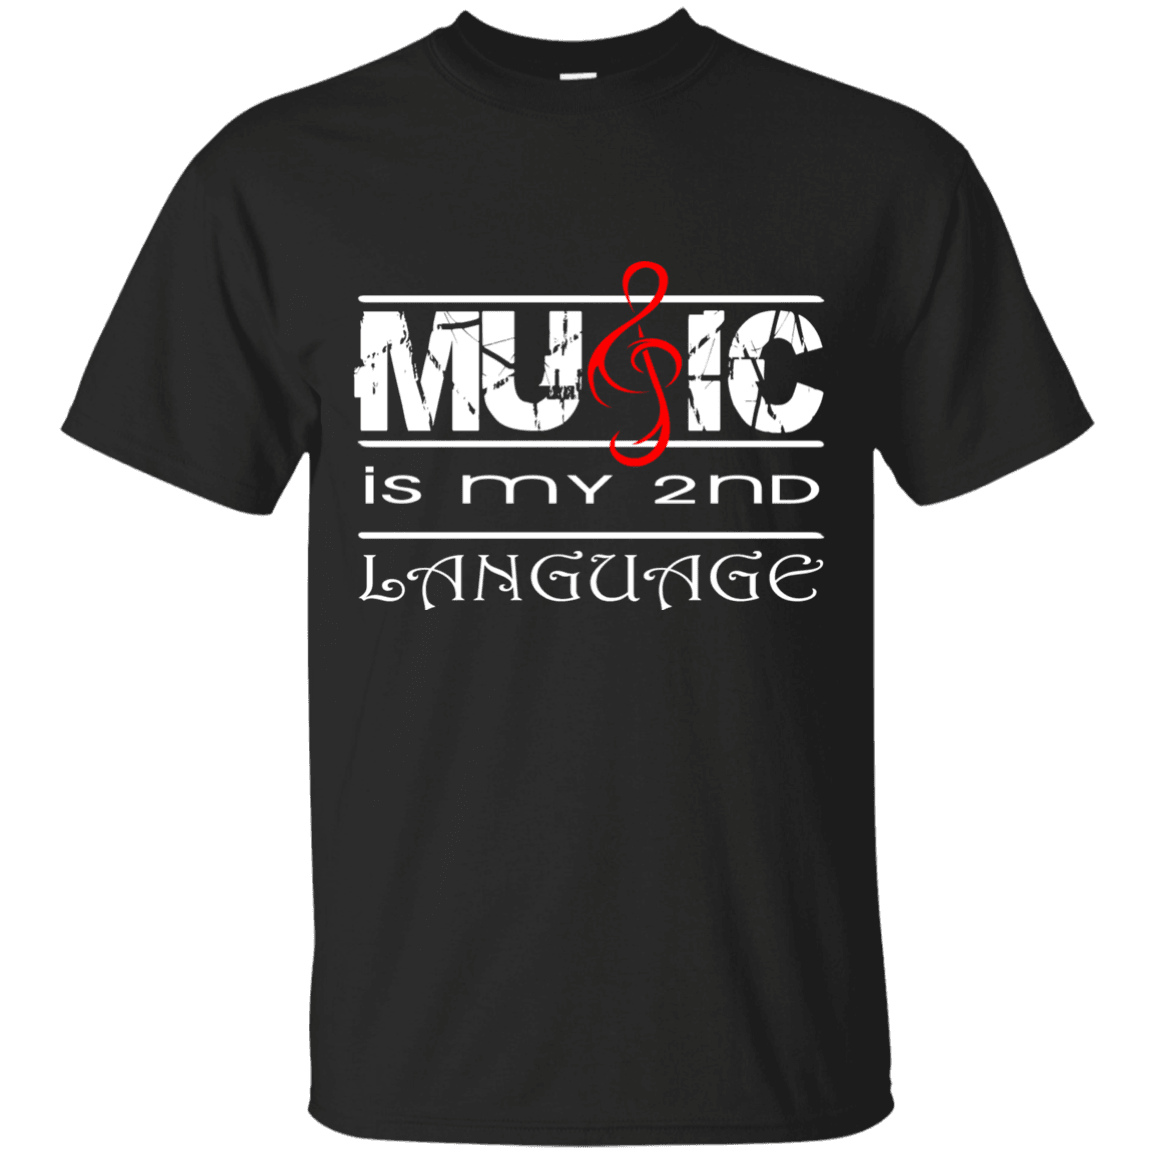 Music Is My 2nd Language T-Shirt - 22-113-4814472-337